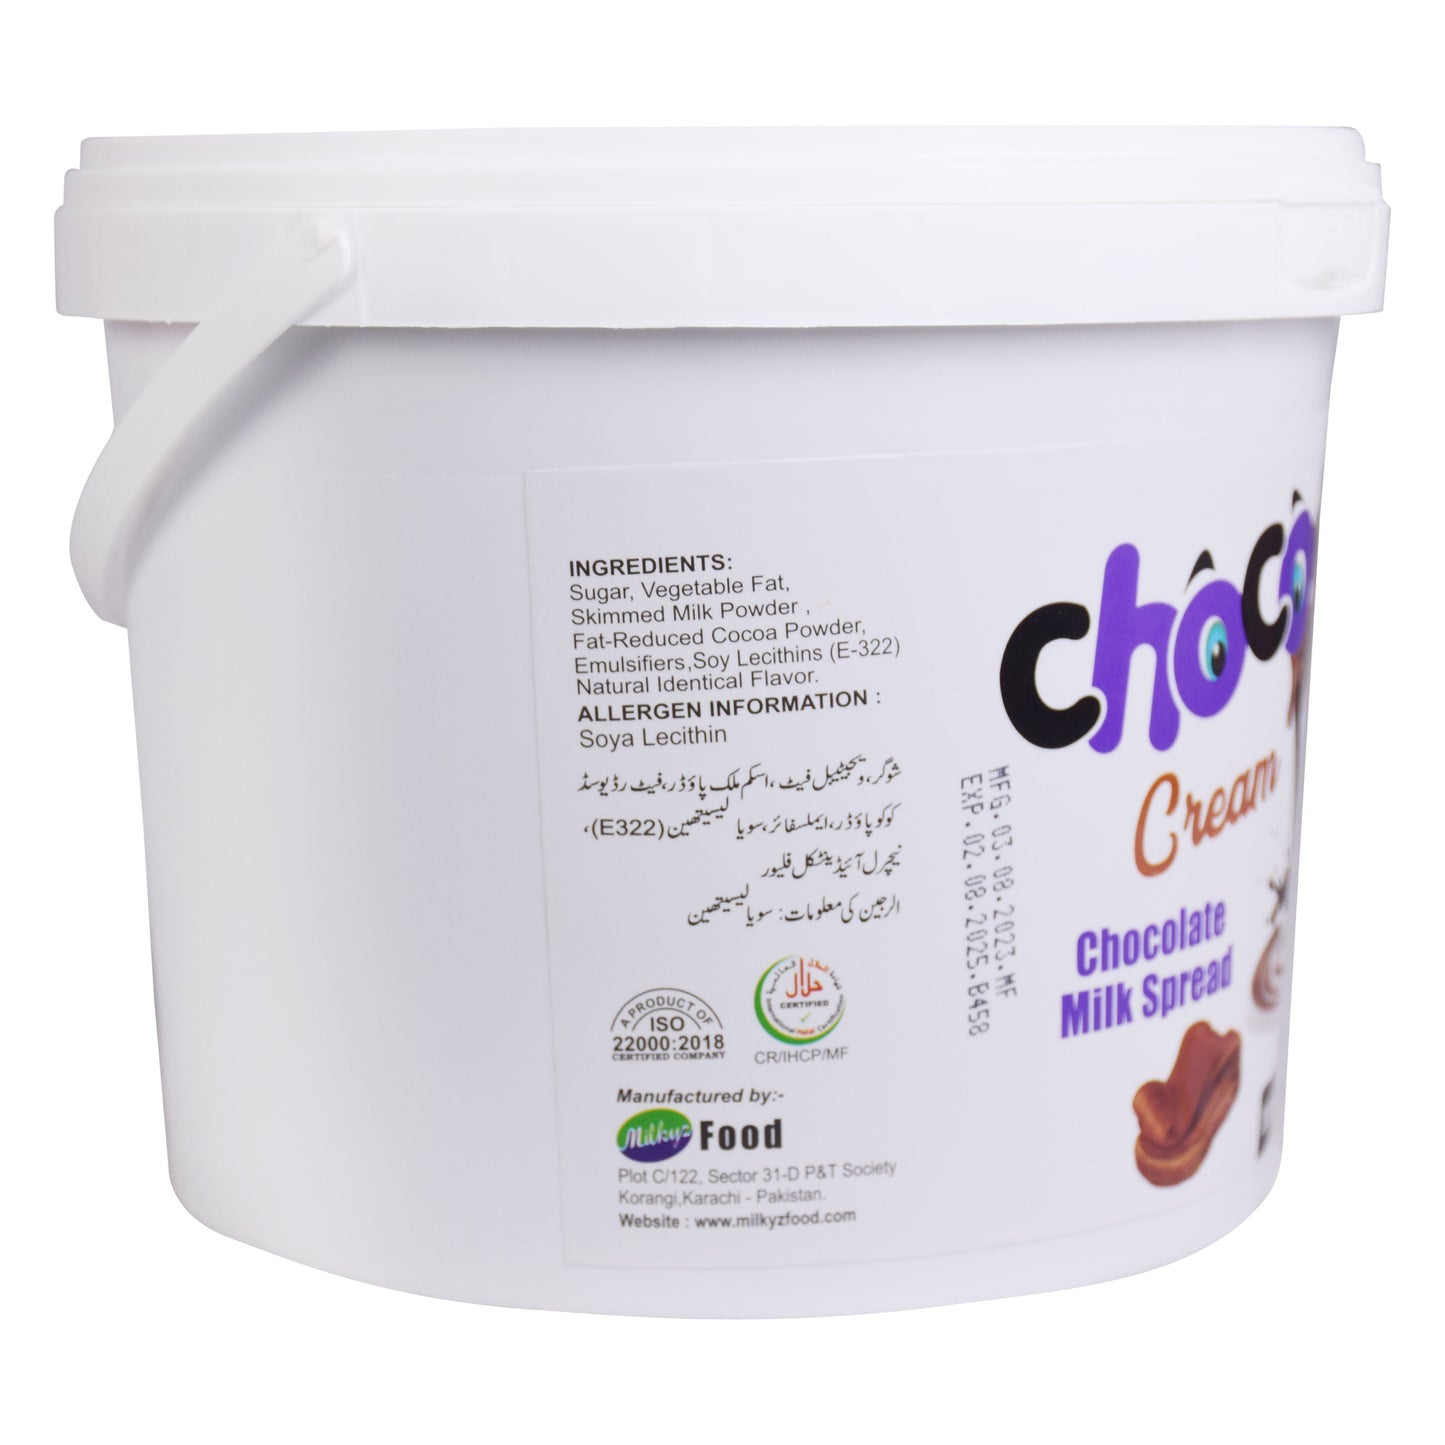 Milkyz Food Choco Cream Chocolate Milk Spread 3kg Bucket